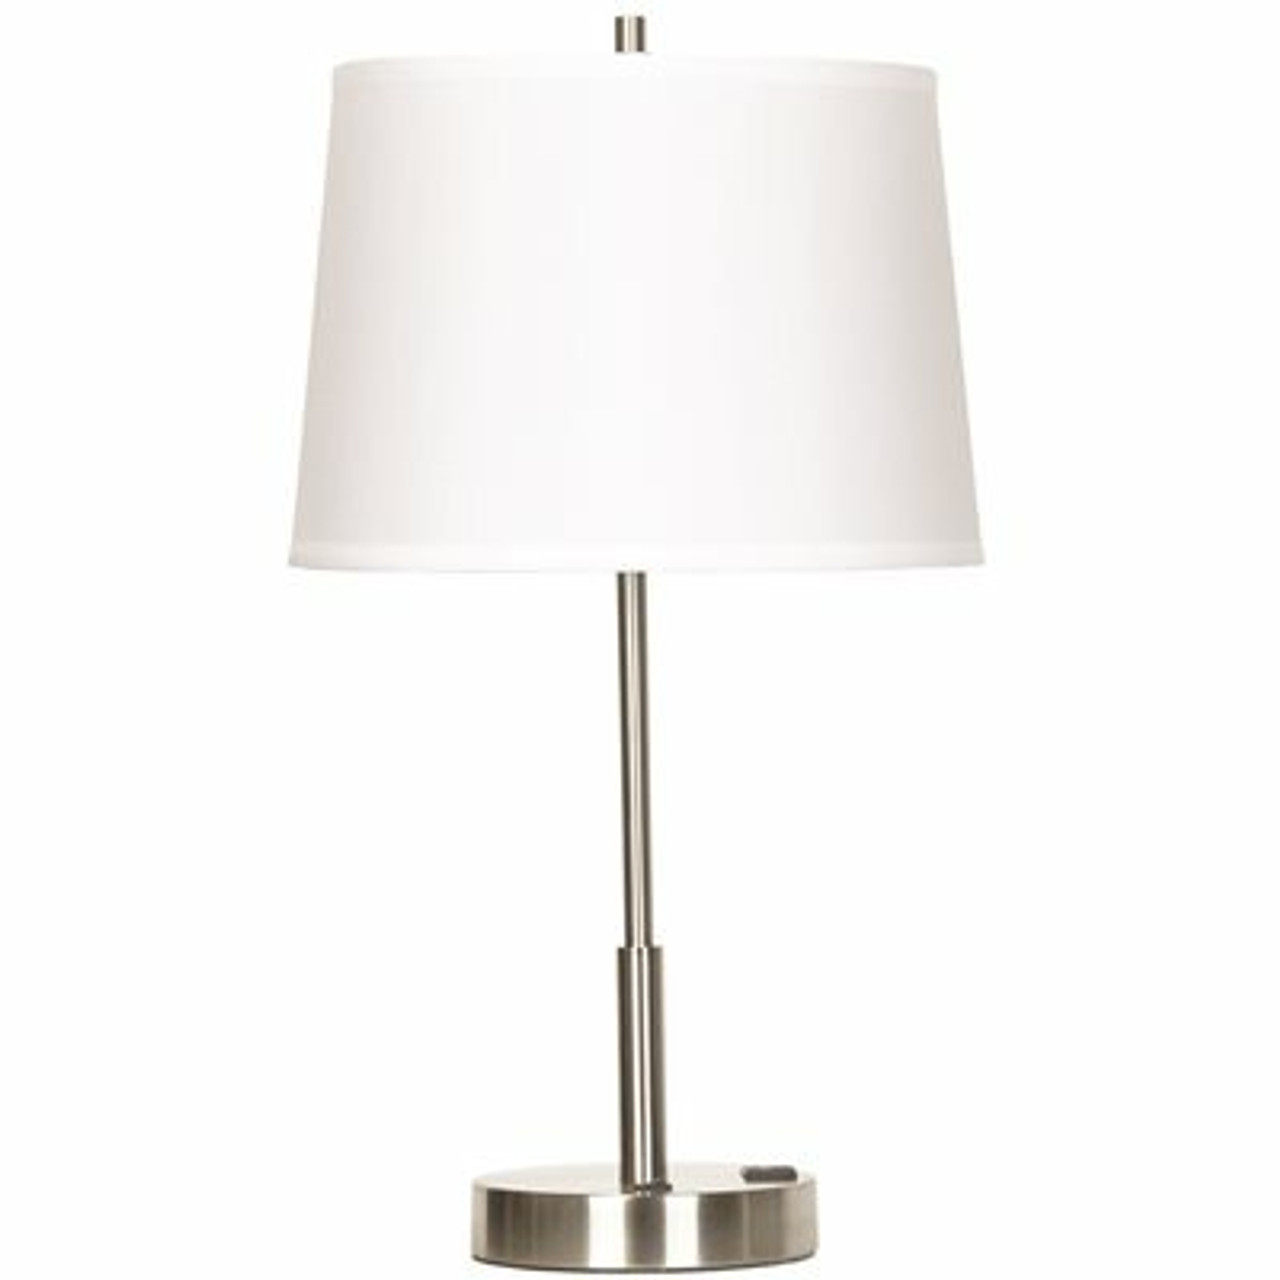 Startex 1L Table Lamp Brush Nickel - 3582458